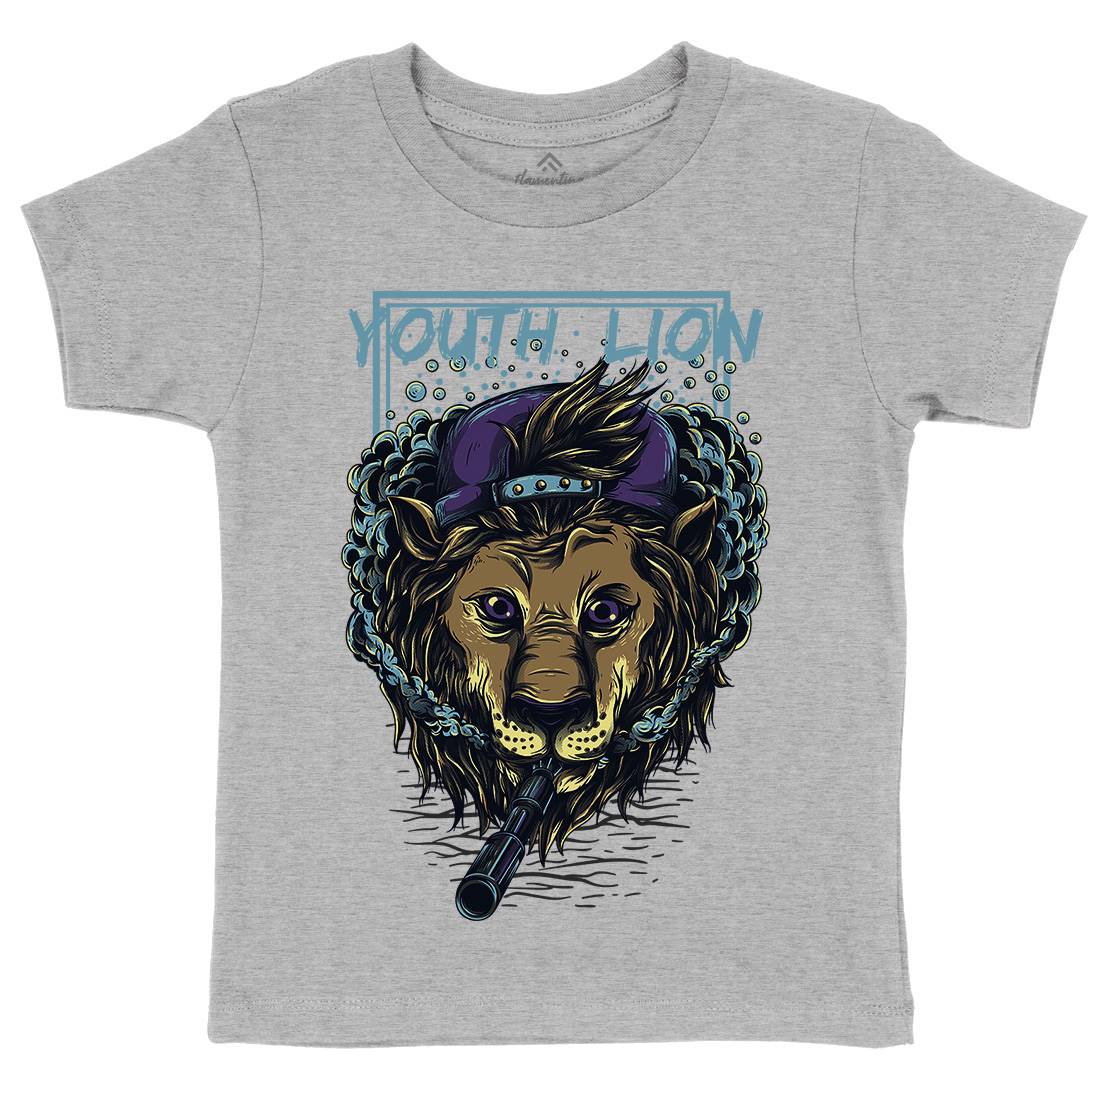 Youth Lion Kids Crew Neck T-Shirt Animals D893